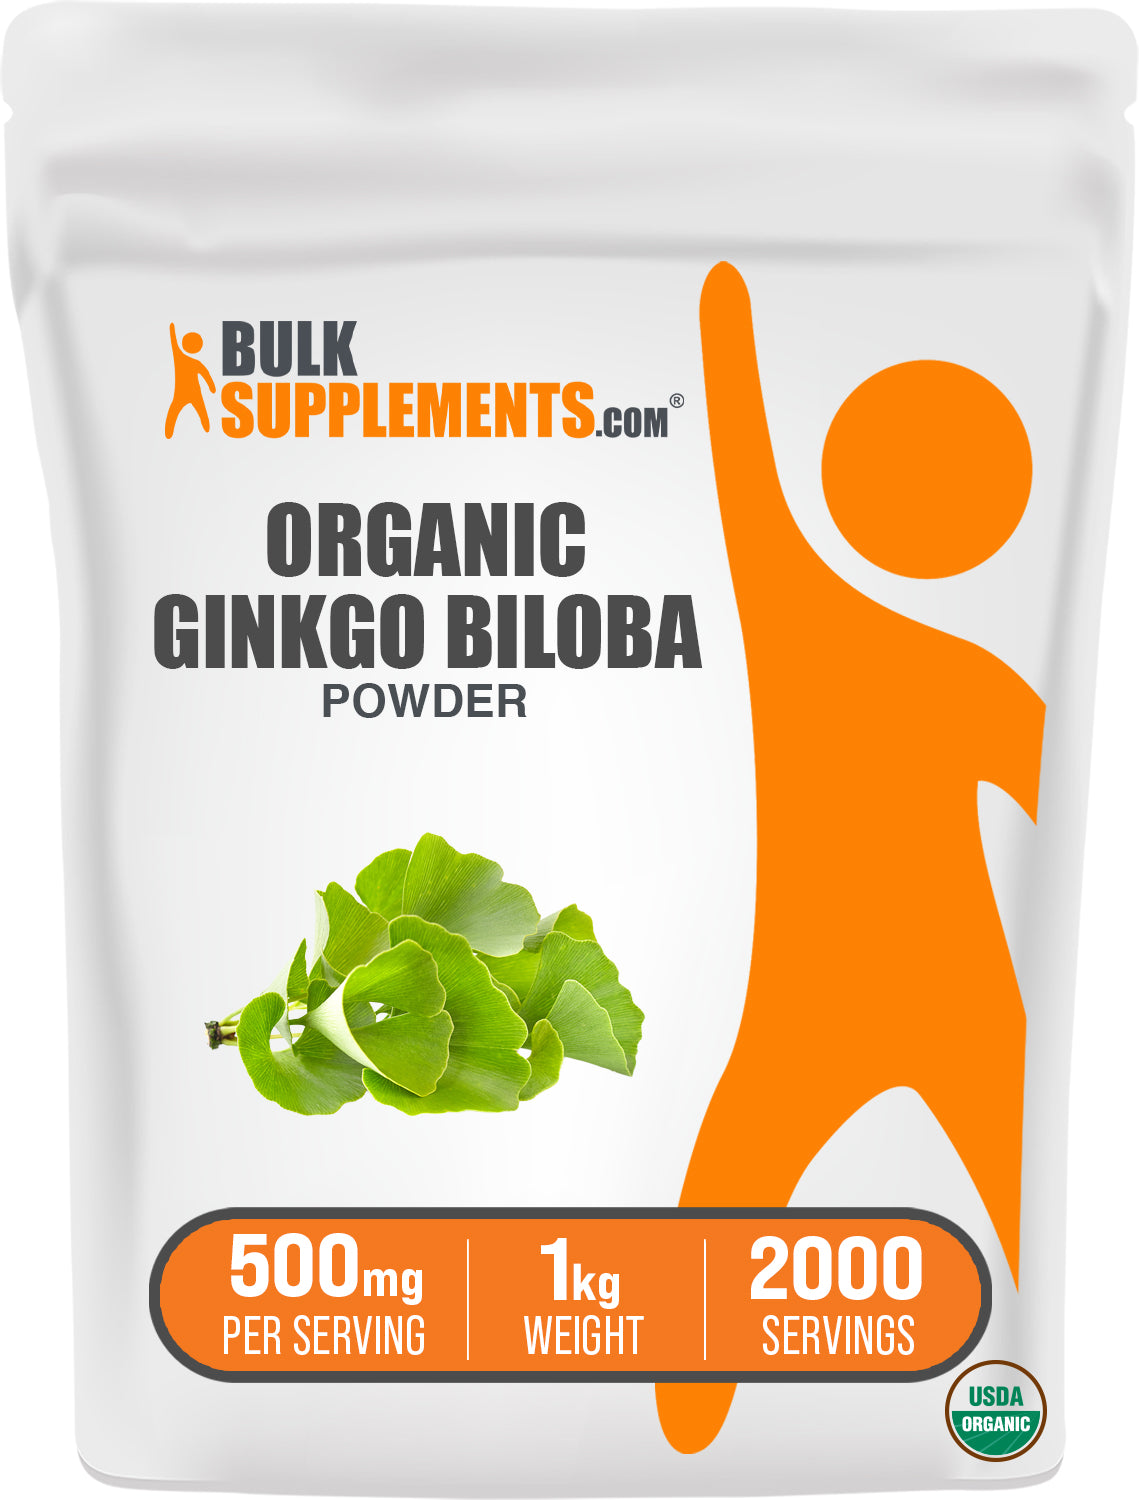 BulkSupplements.com Organic Ginkgo Biloba Powder 1kg bag image